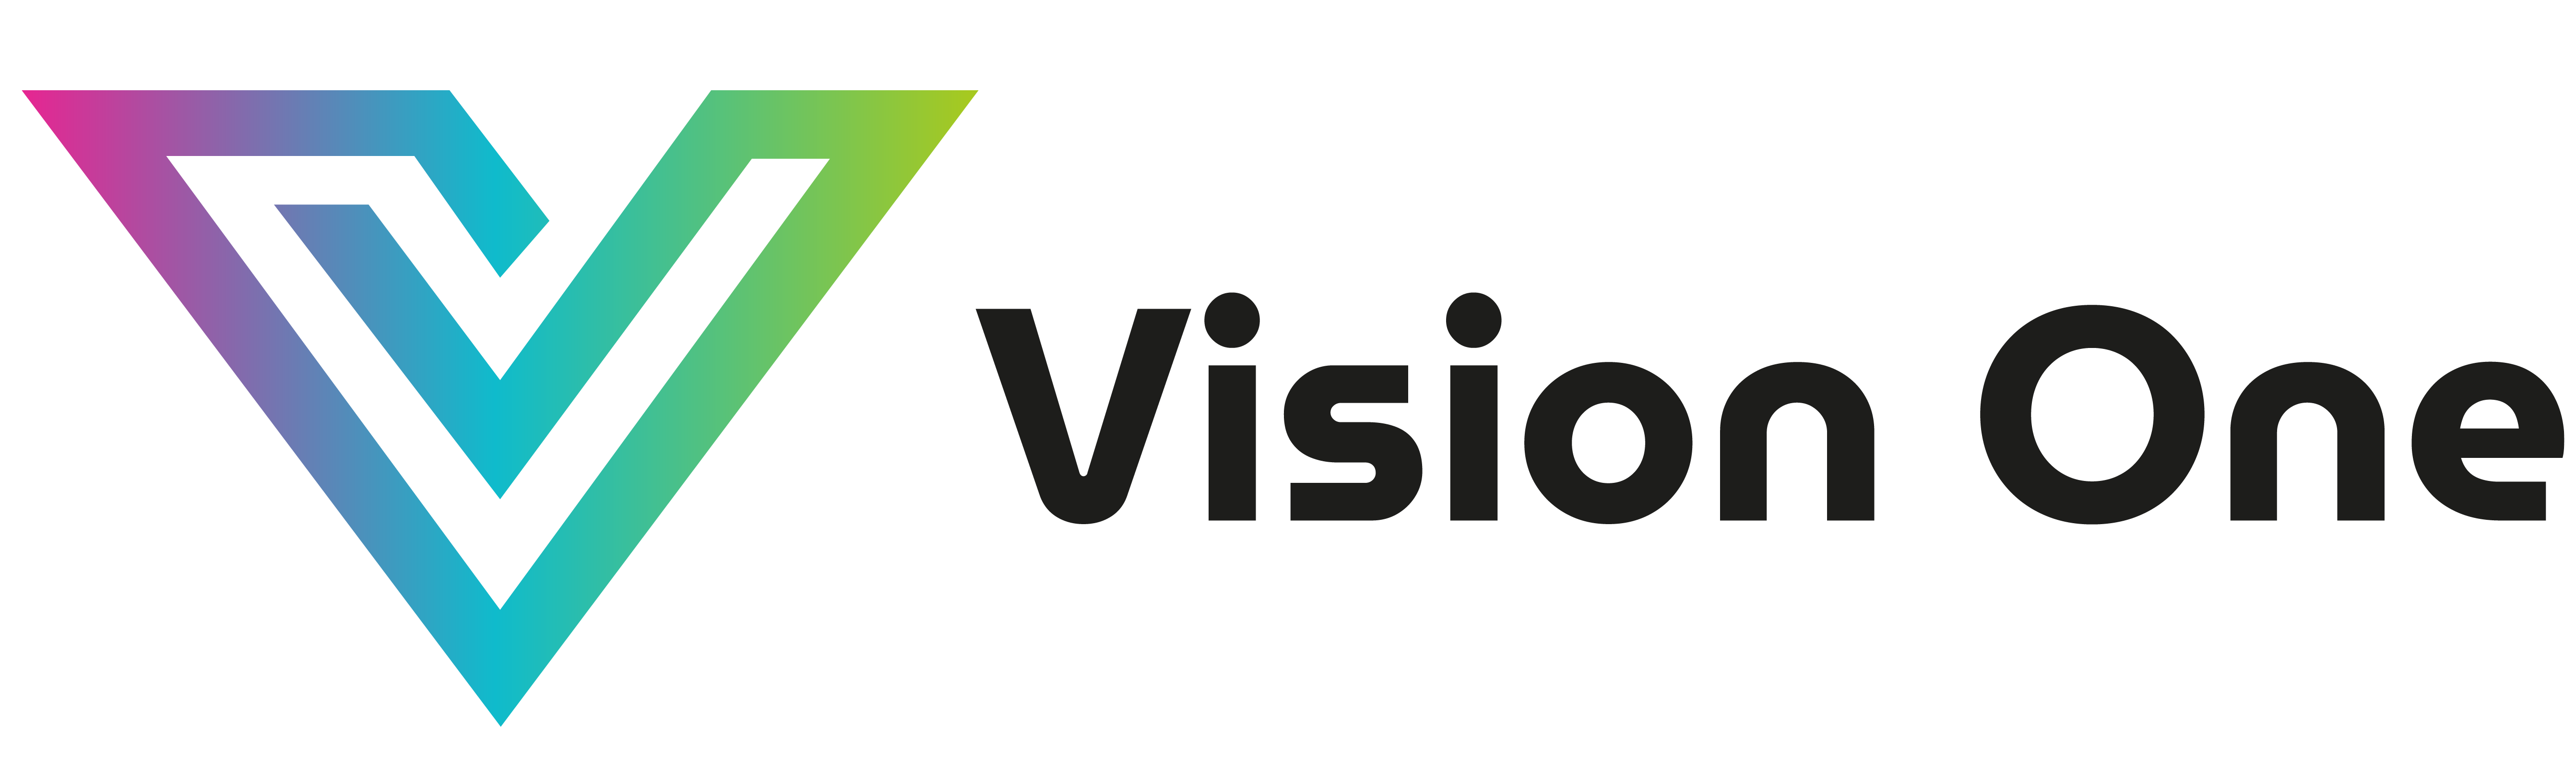 Vision One logo